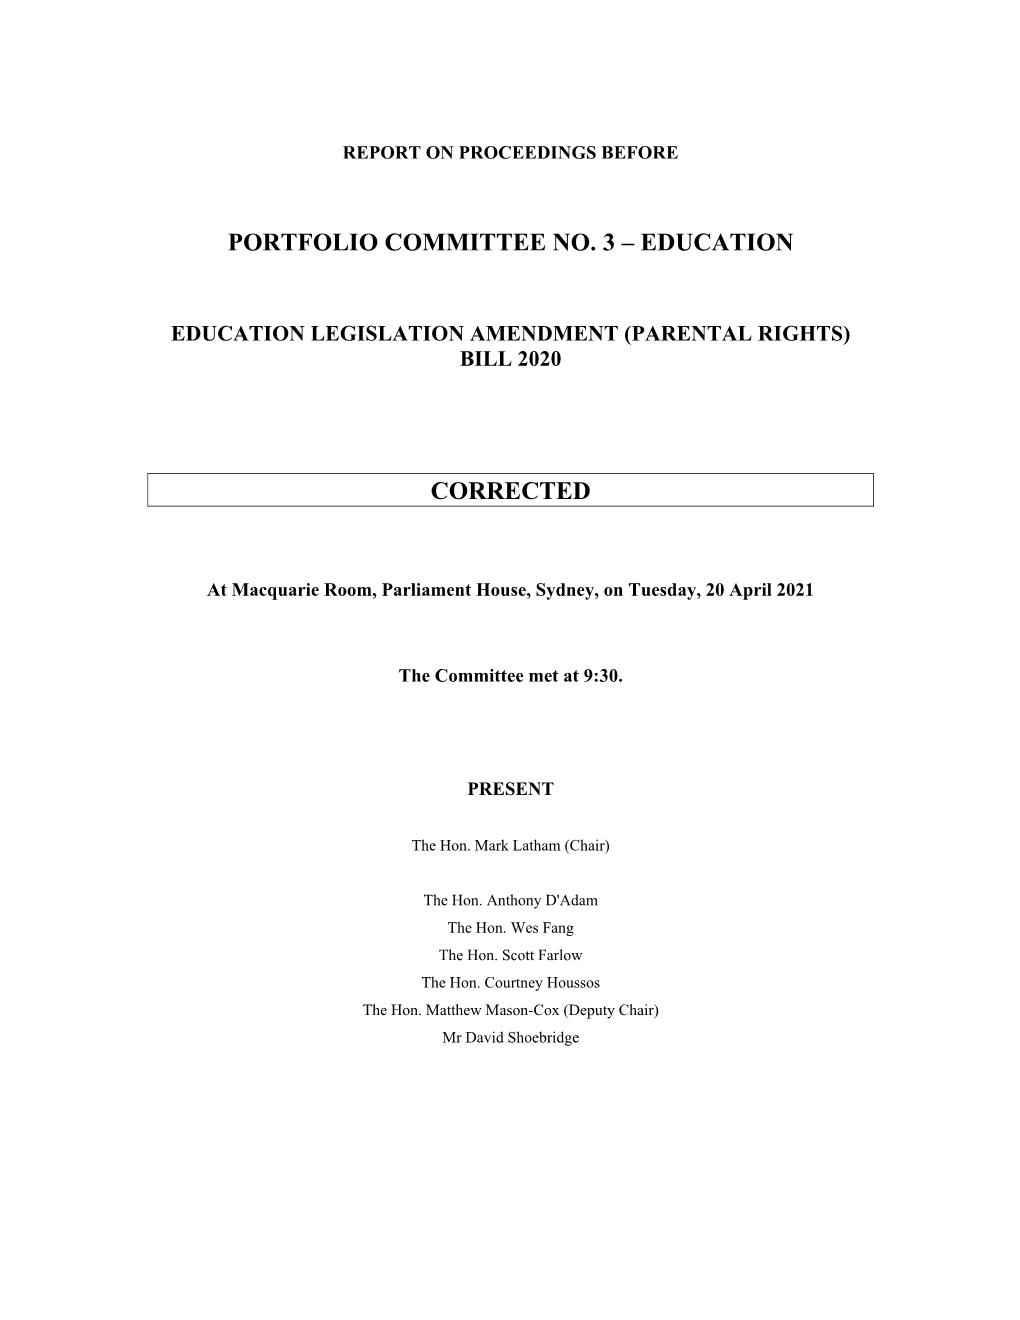 Portfolio Committee No. 3 – Education Corrected